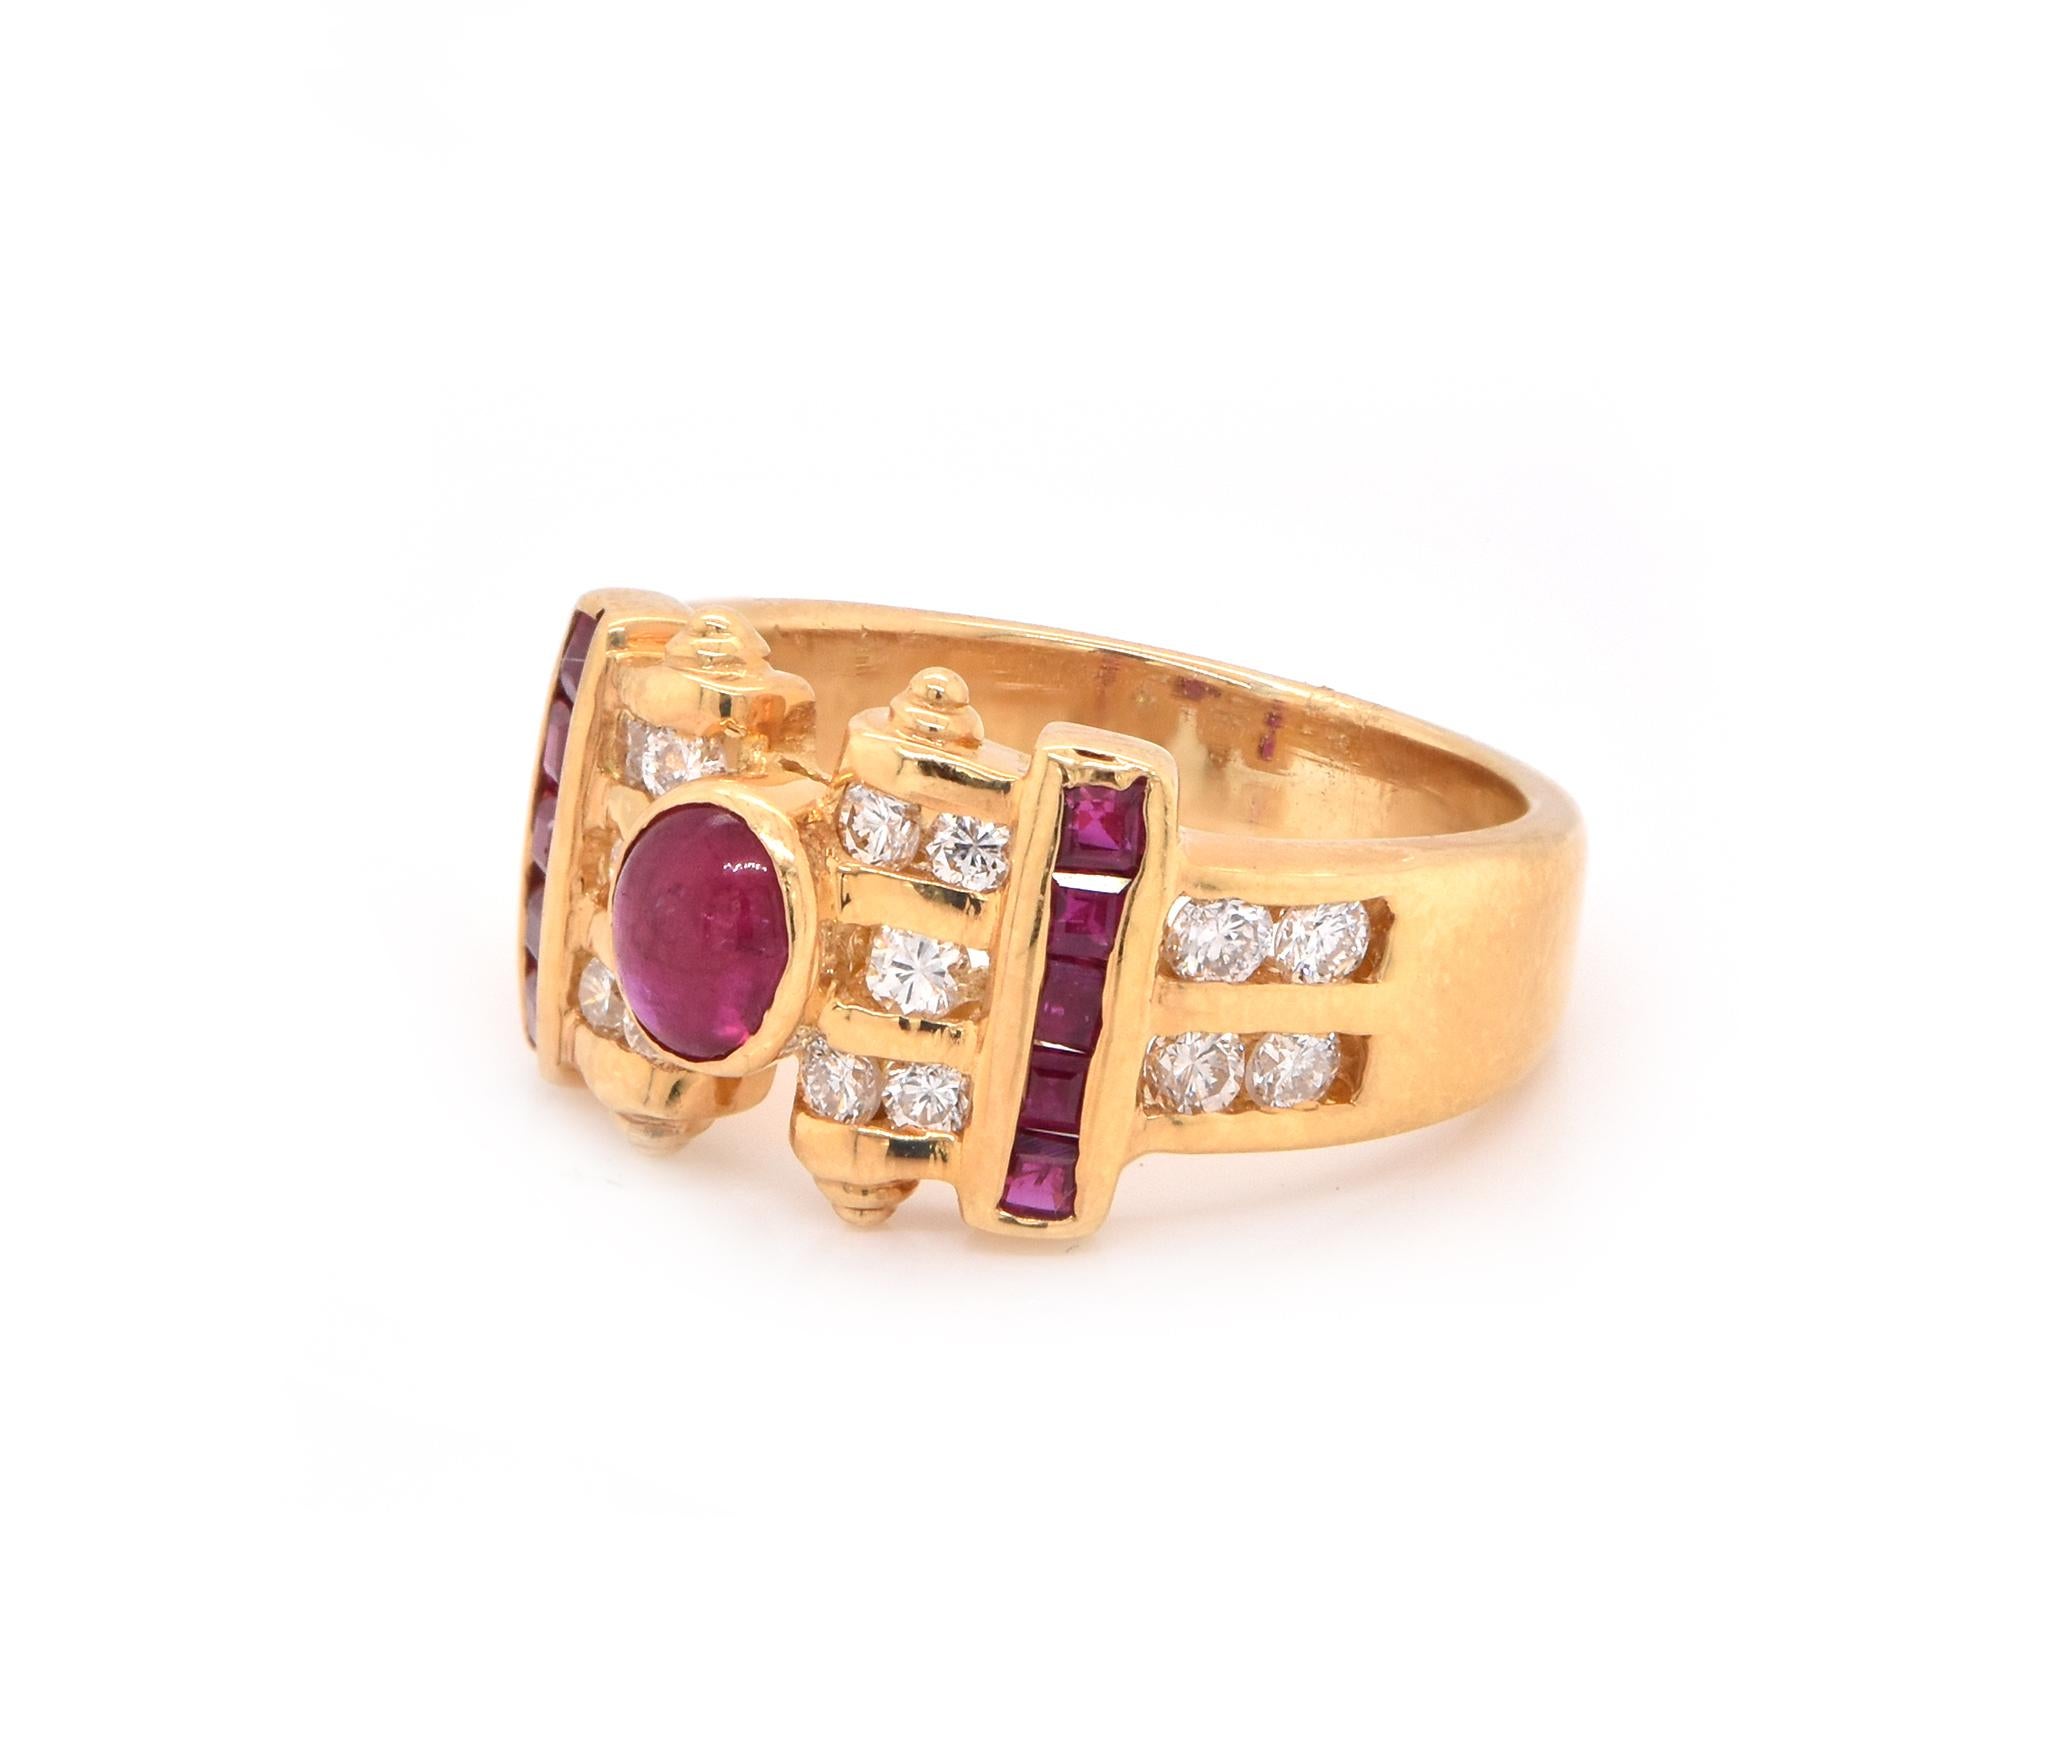 Mixed Cut 18 Karat Yellow Gold Ruby and Diamond Ring